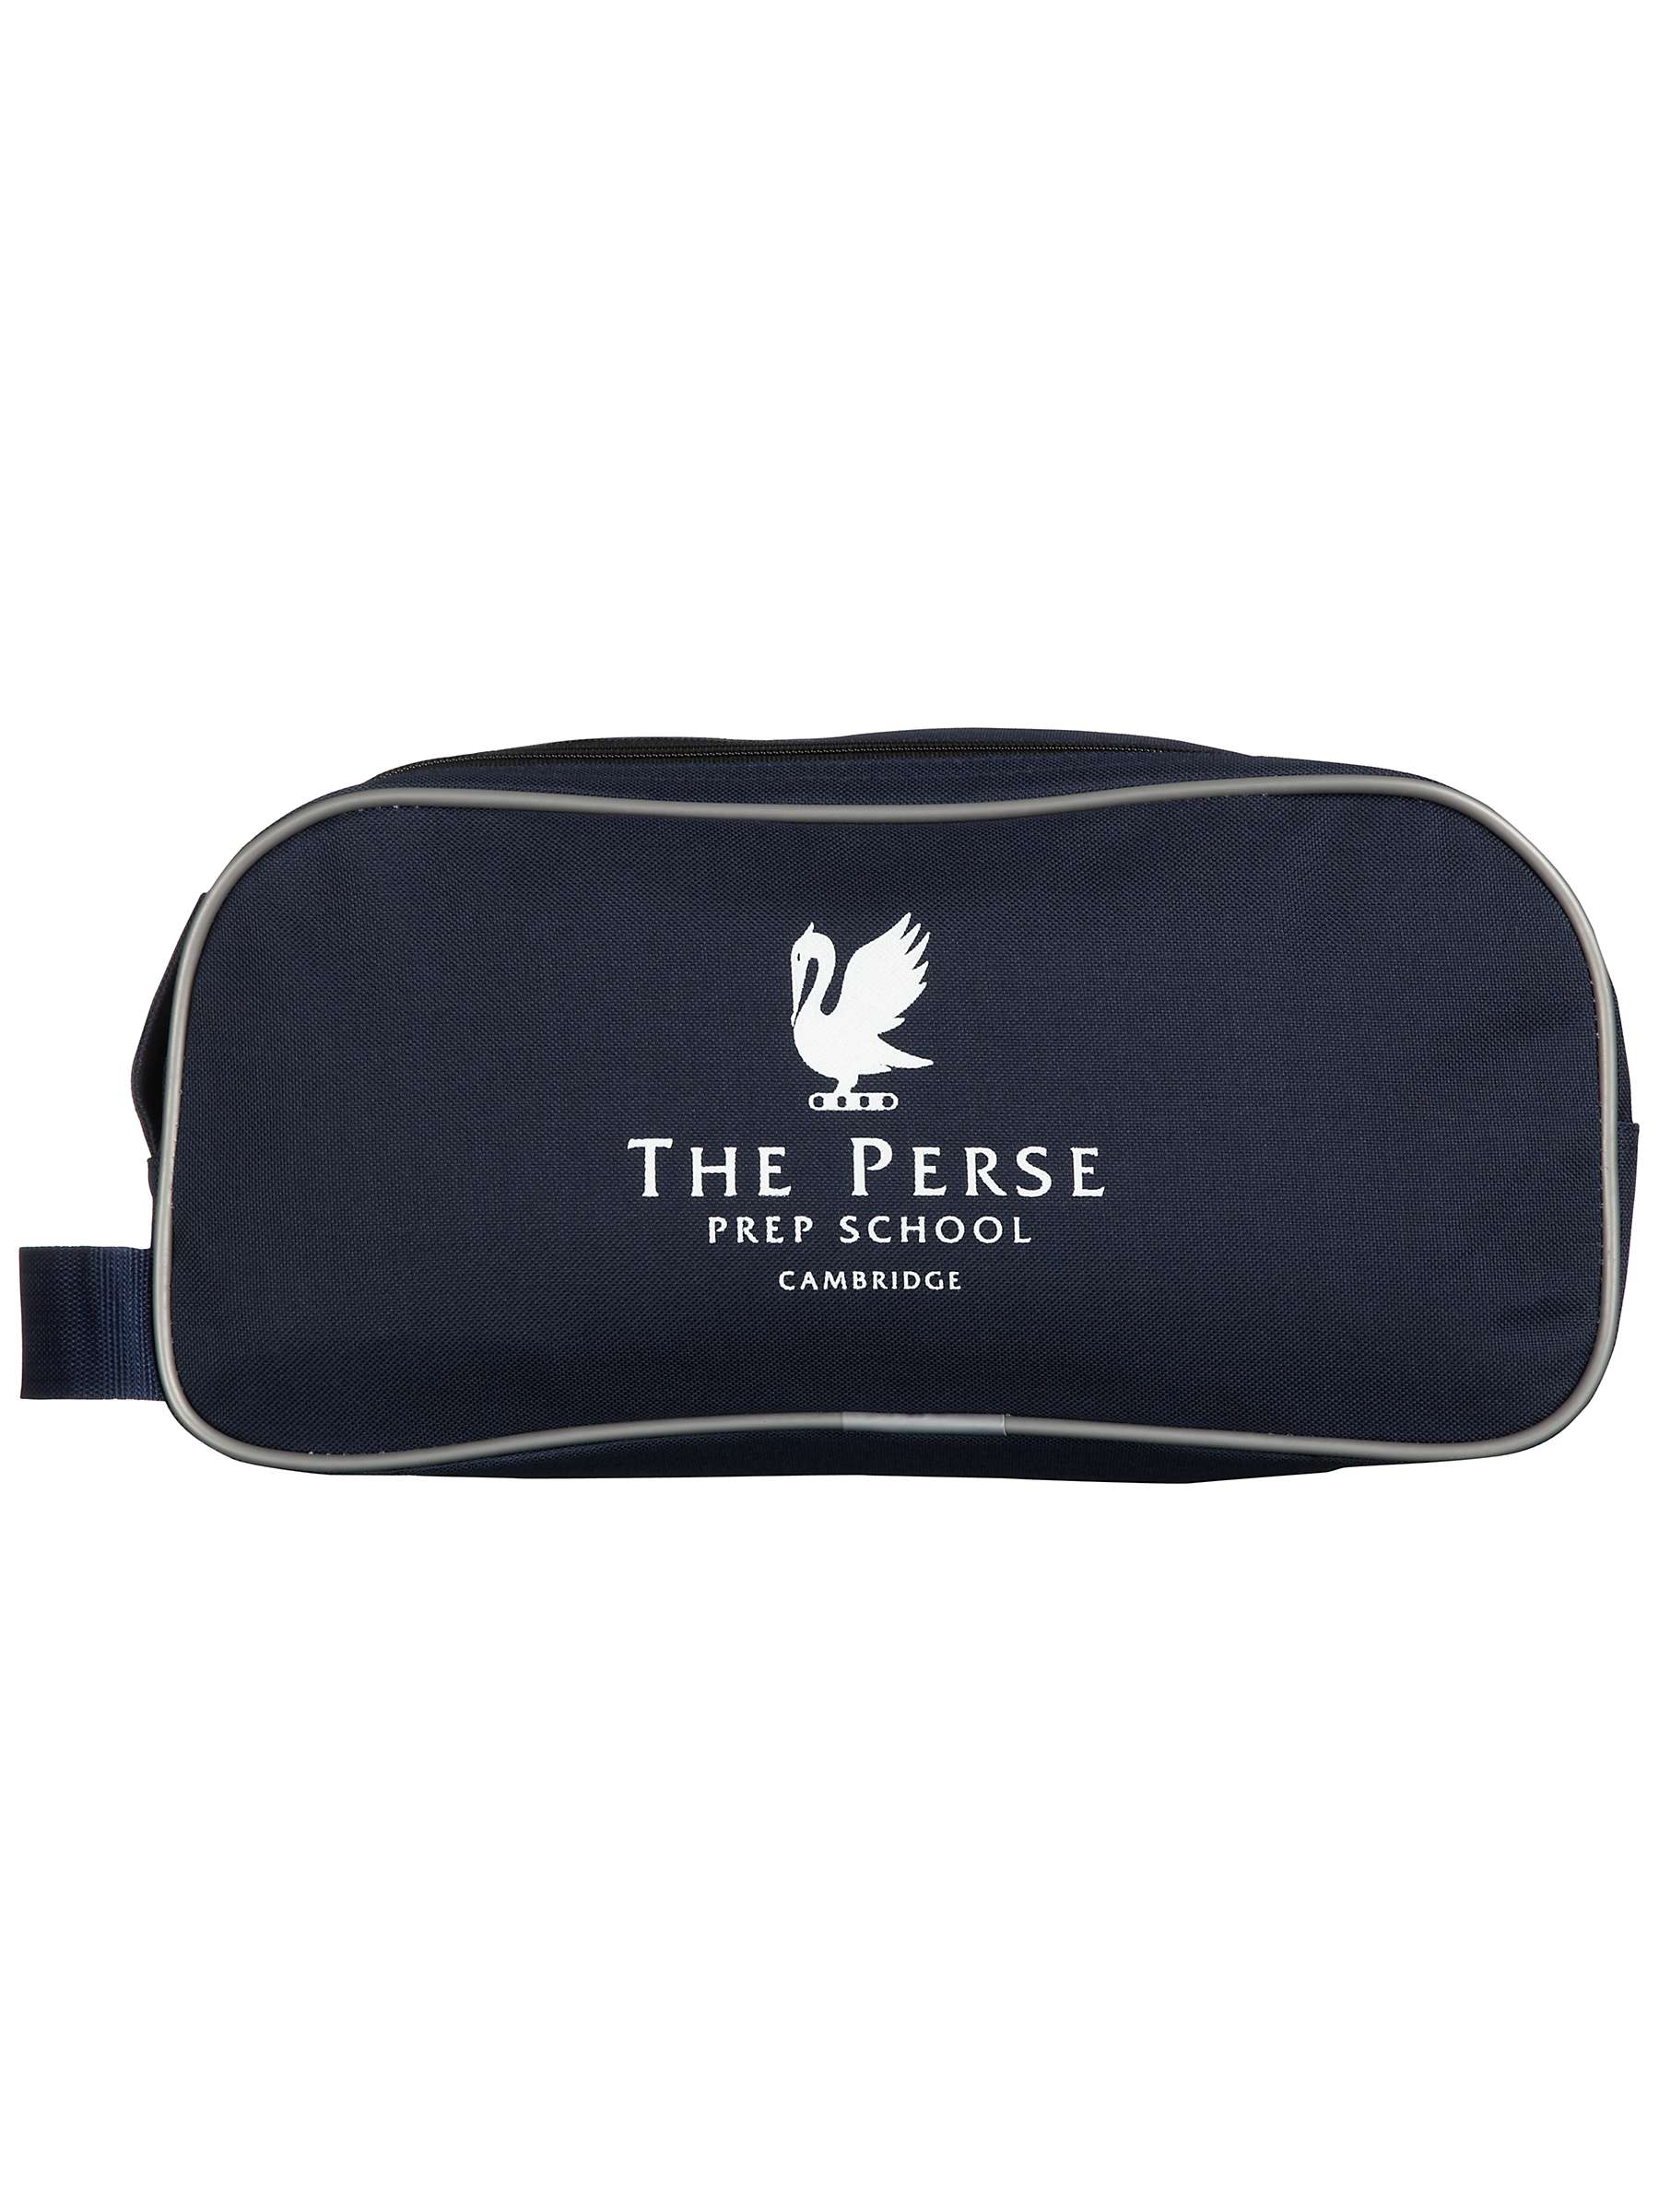 Buy The Perse Prep School Unisex Boot Bag Online at johnlewis.com